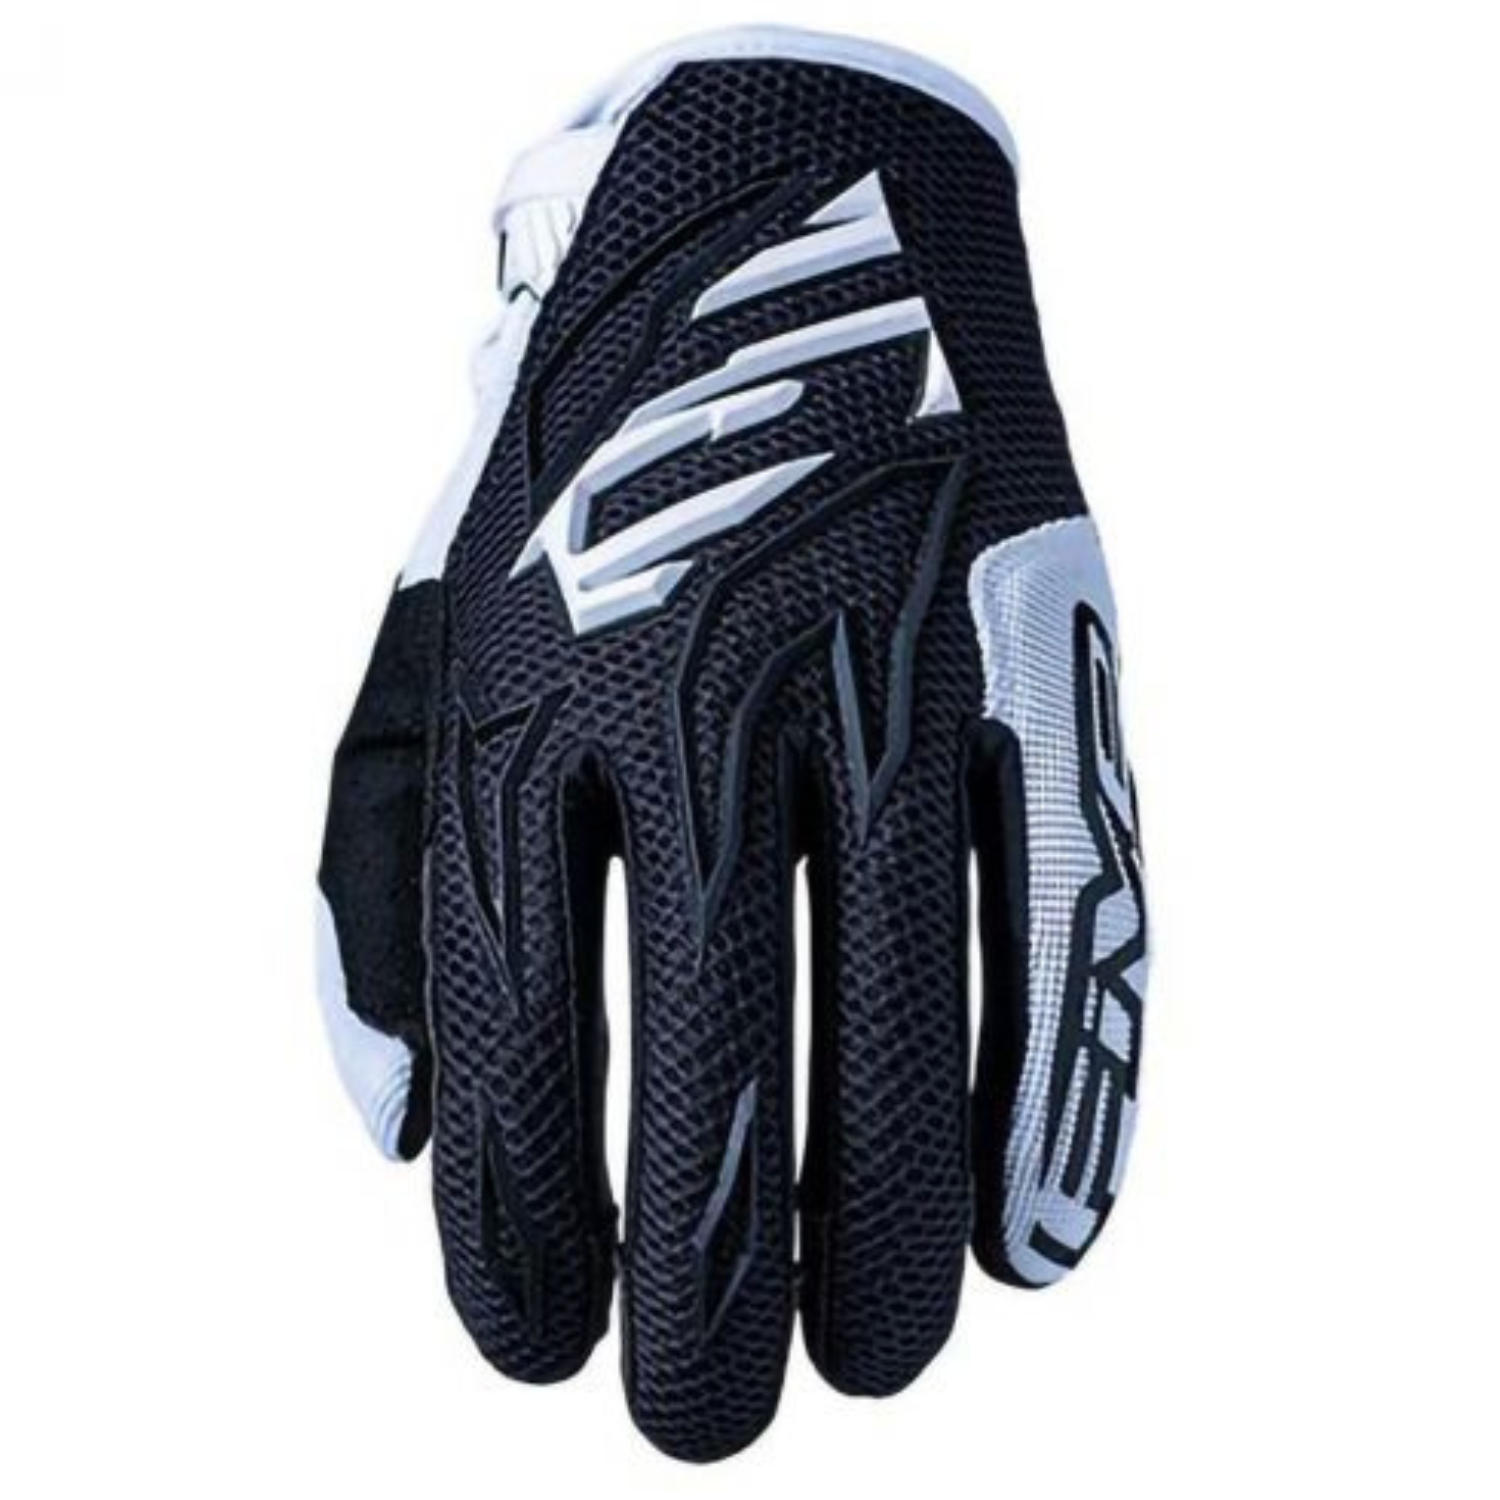 Five MXF3 Kid Gloves Black White Size L